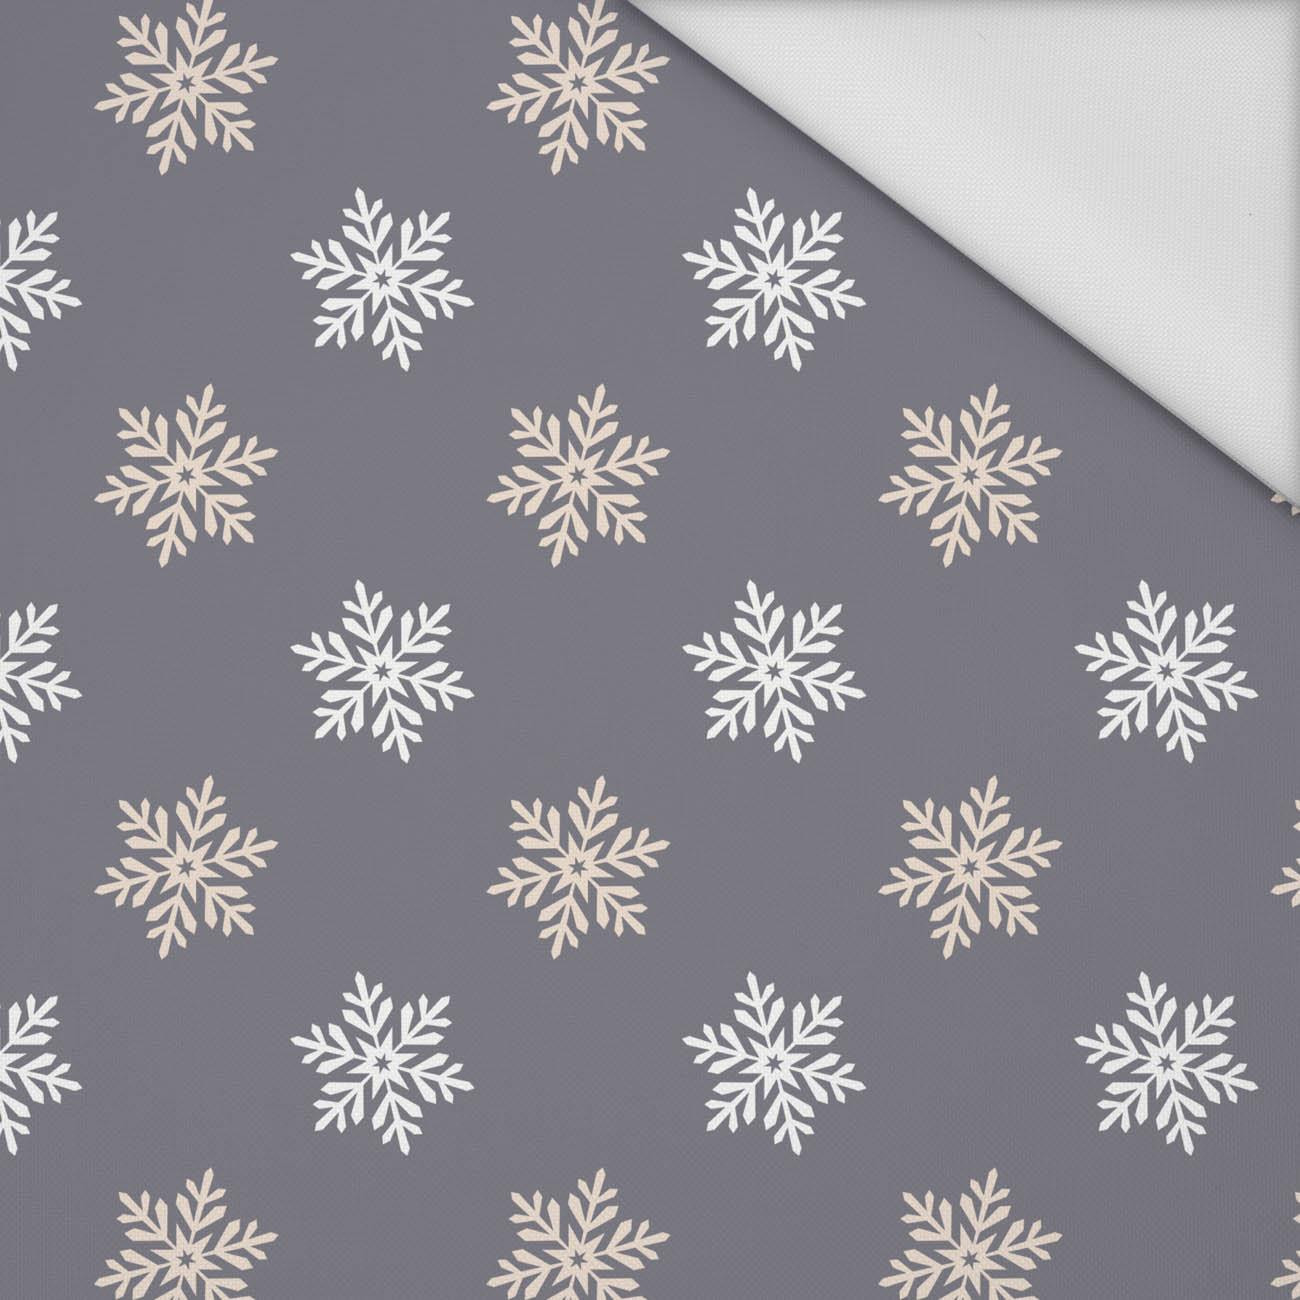 SNOWFLAKES pat. 5 (WINTER TIME) / grey - Waterproof woven fabric